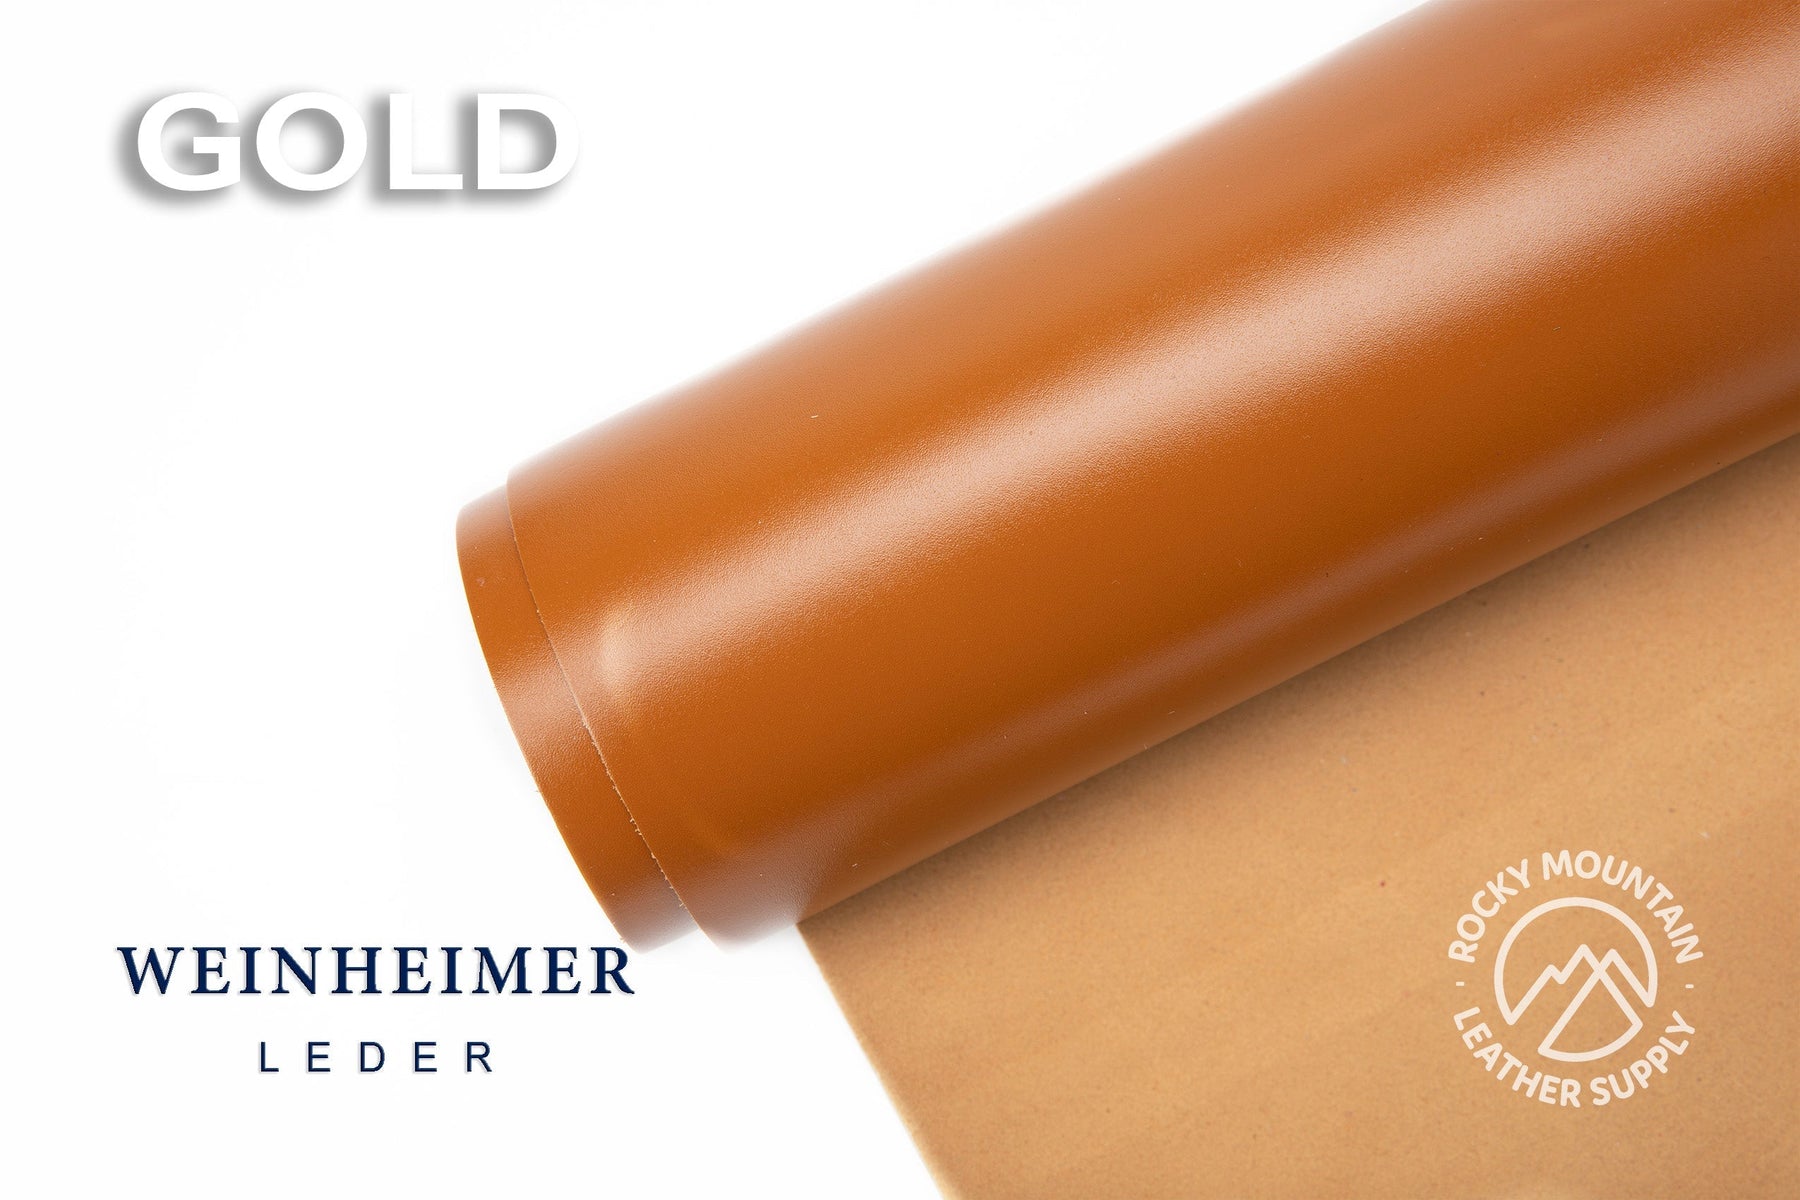 Weinheimer Leder 🇩🇪 - Classic Box Calf - Luxury Calf Leather (HIDES)